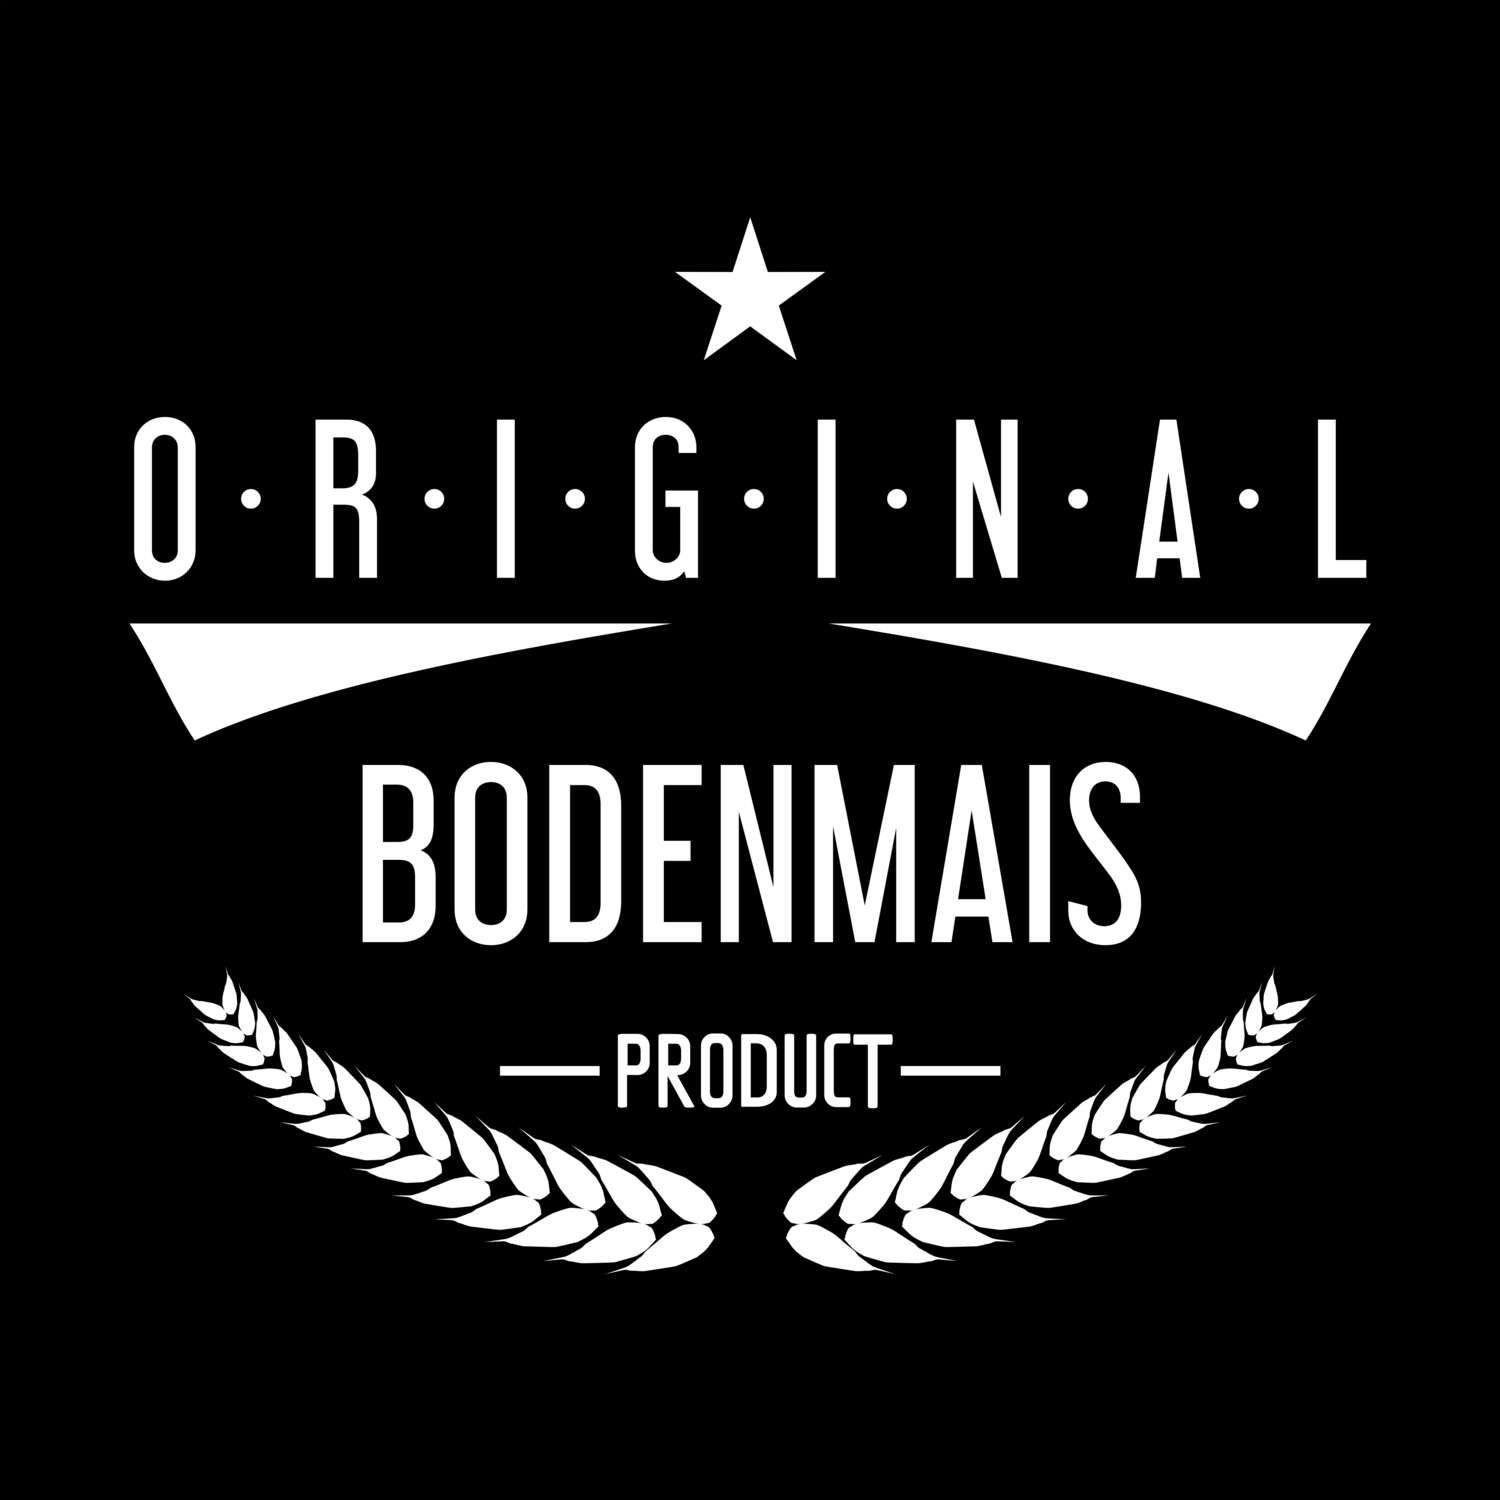 Bodenmais T-Shirt »Original Product«